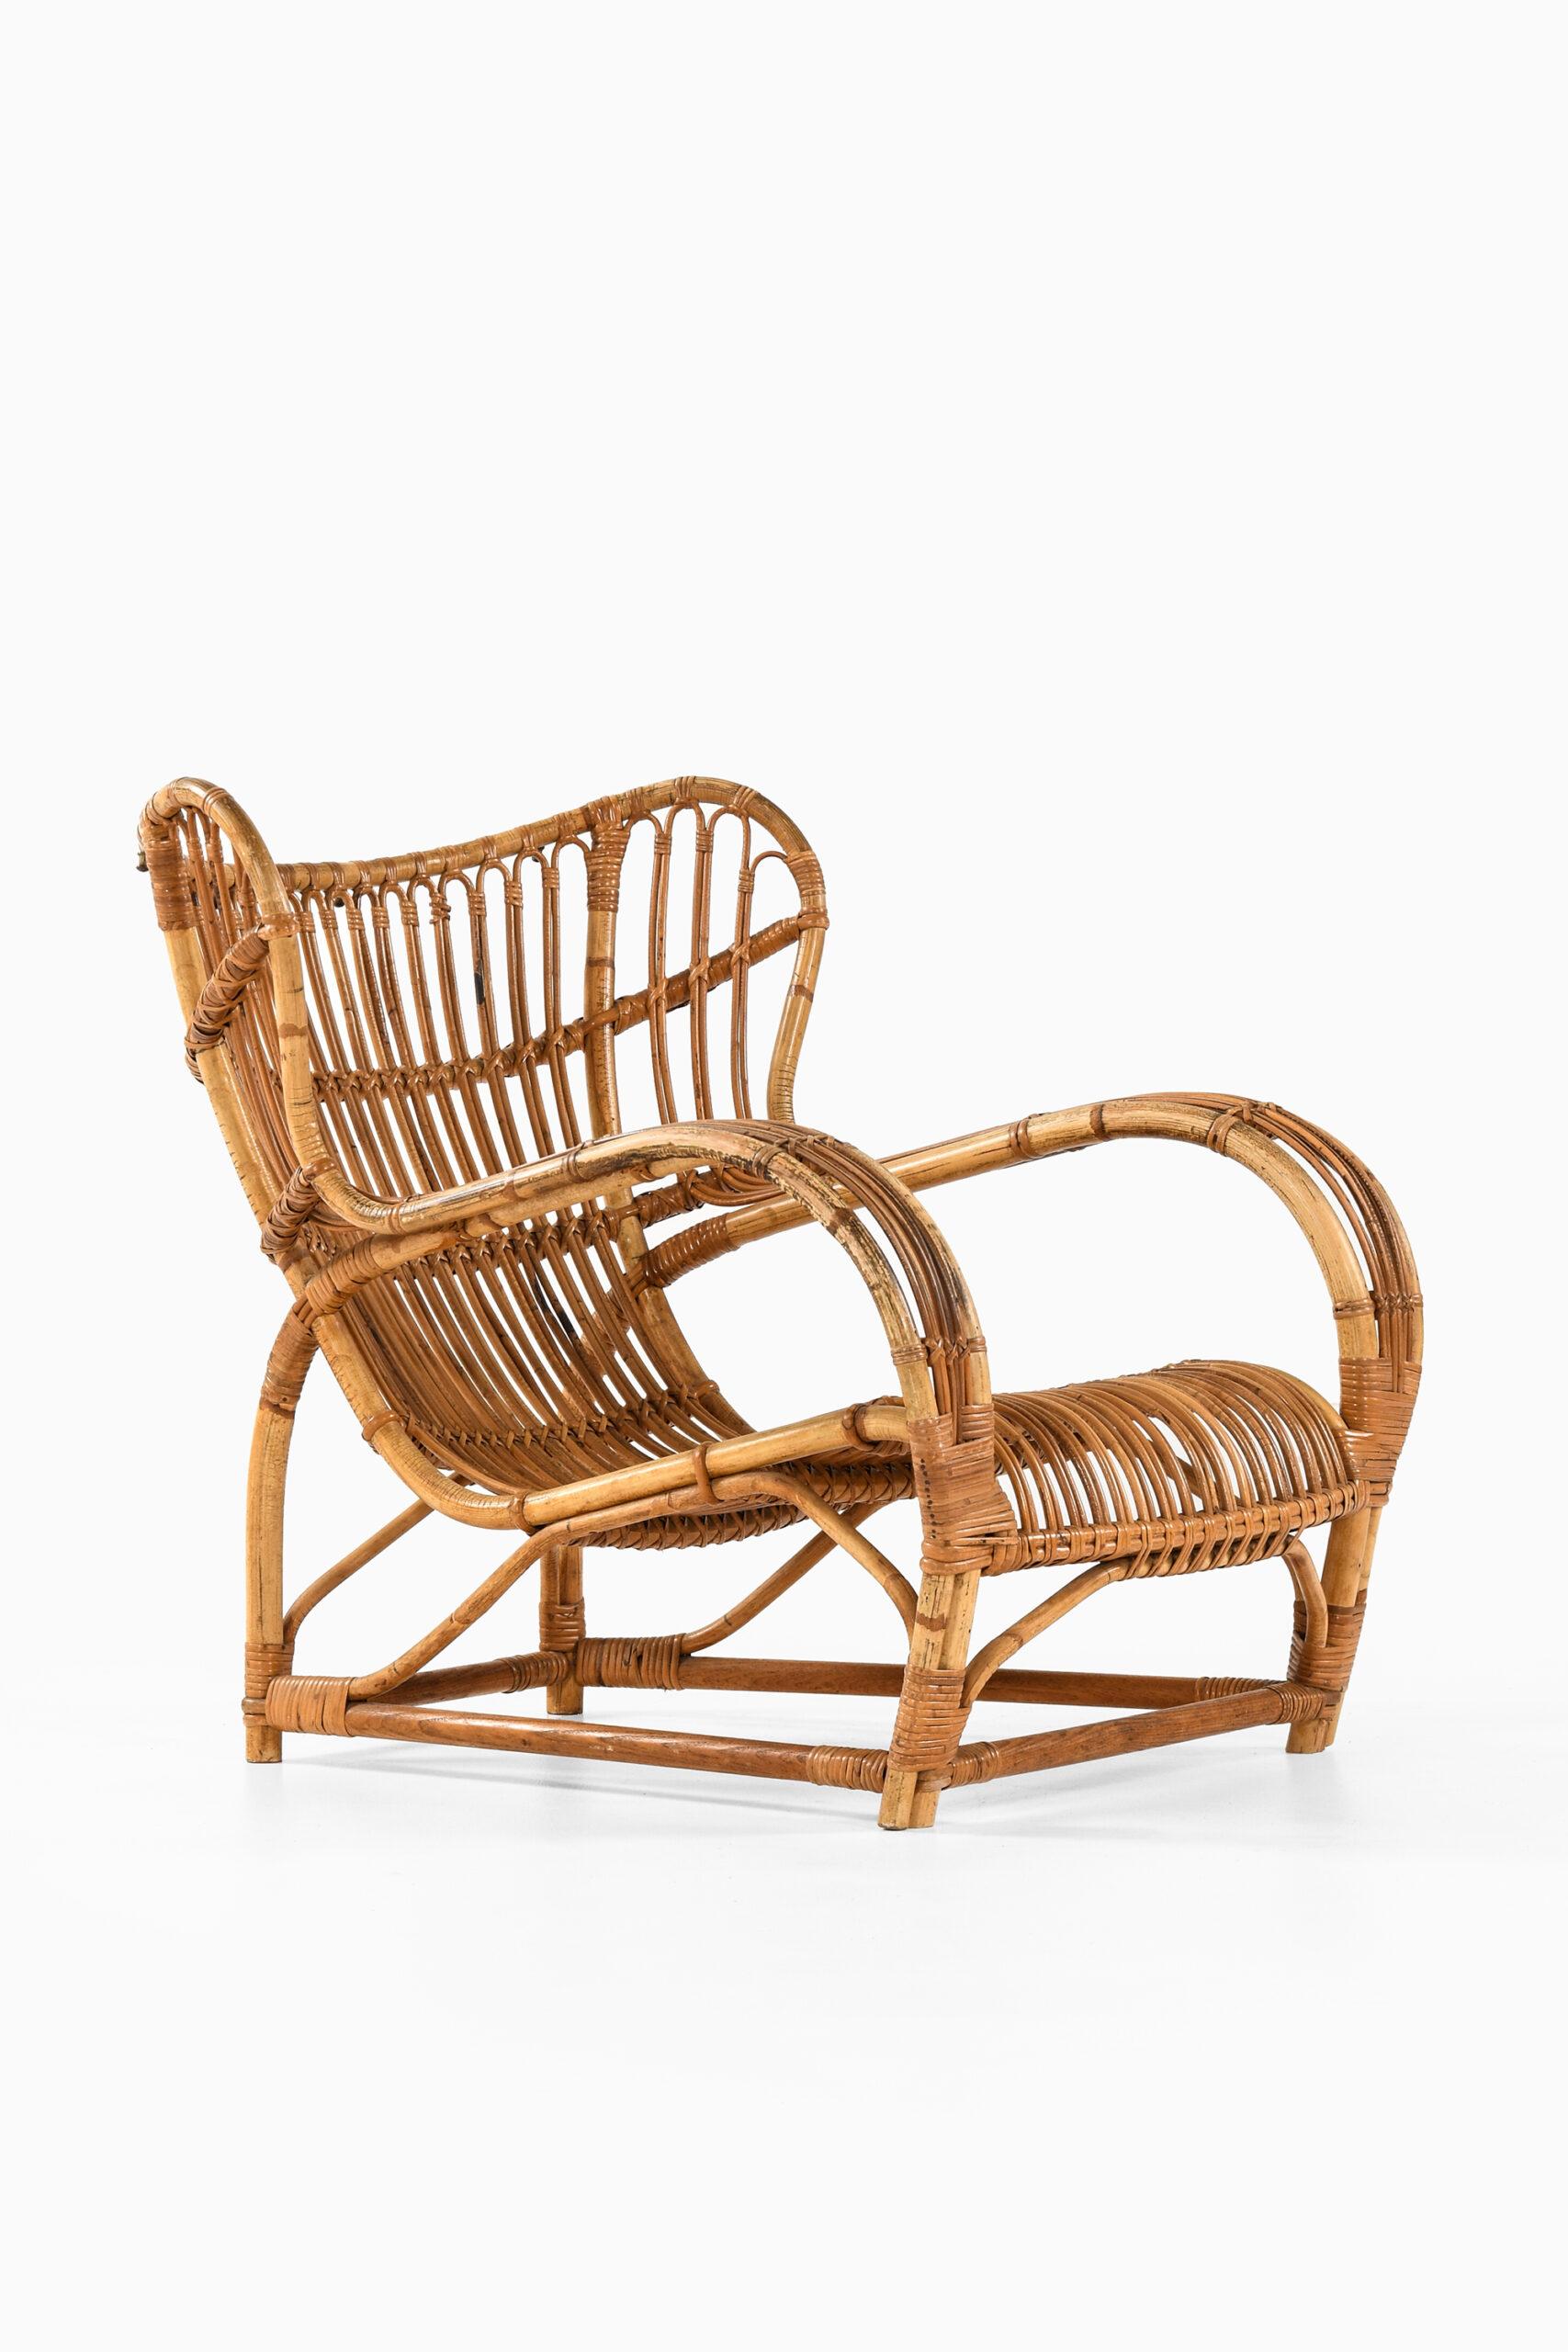 Scandinavian Modern Viggo Boesen Easy Chair Produced by R. Wengler For Sale